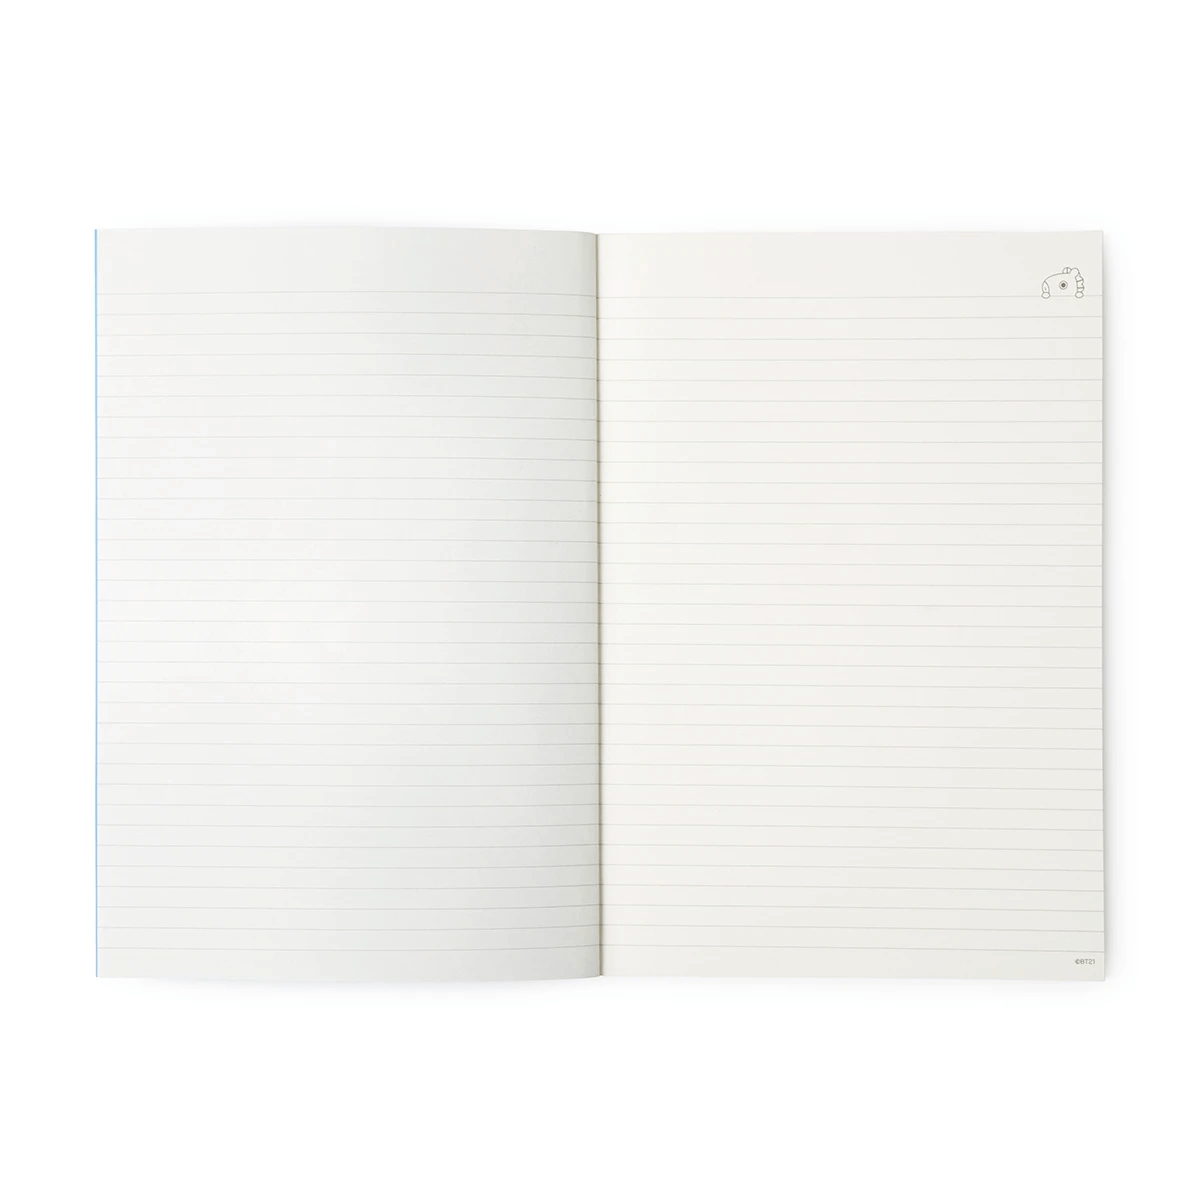 BT21 MANG B5 Ruled Writing Note Pads